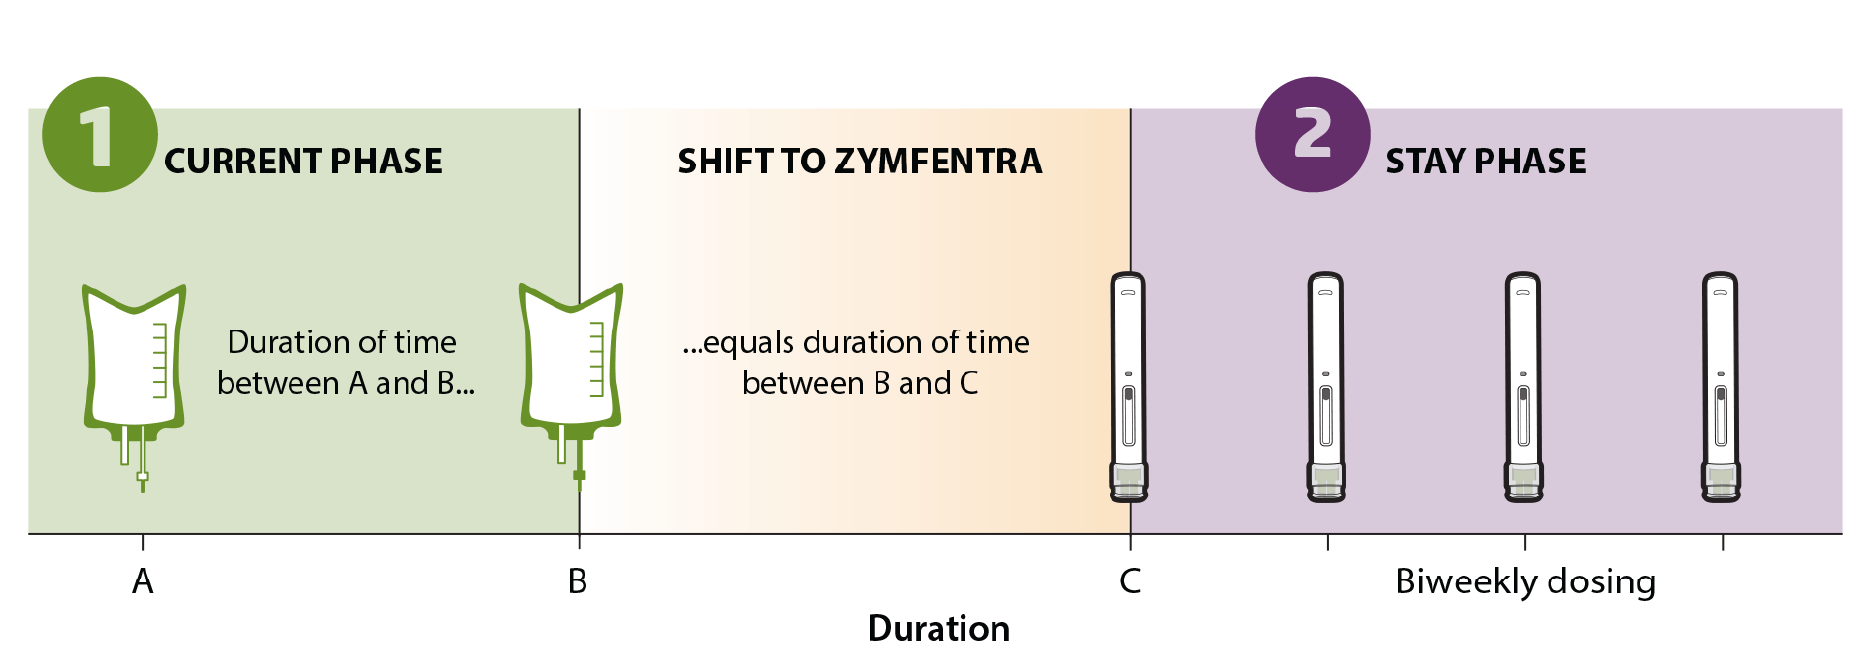 Shift To Zymfentra